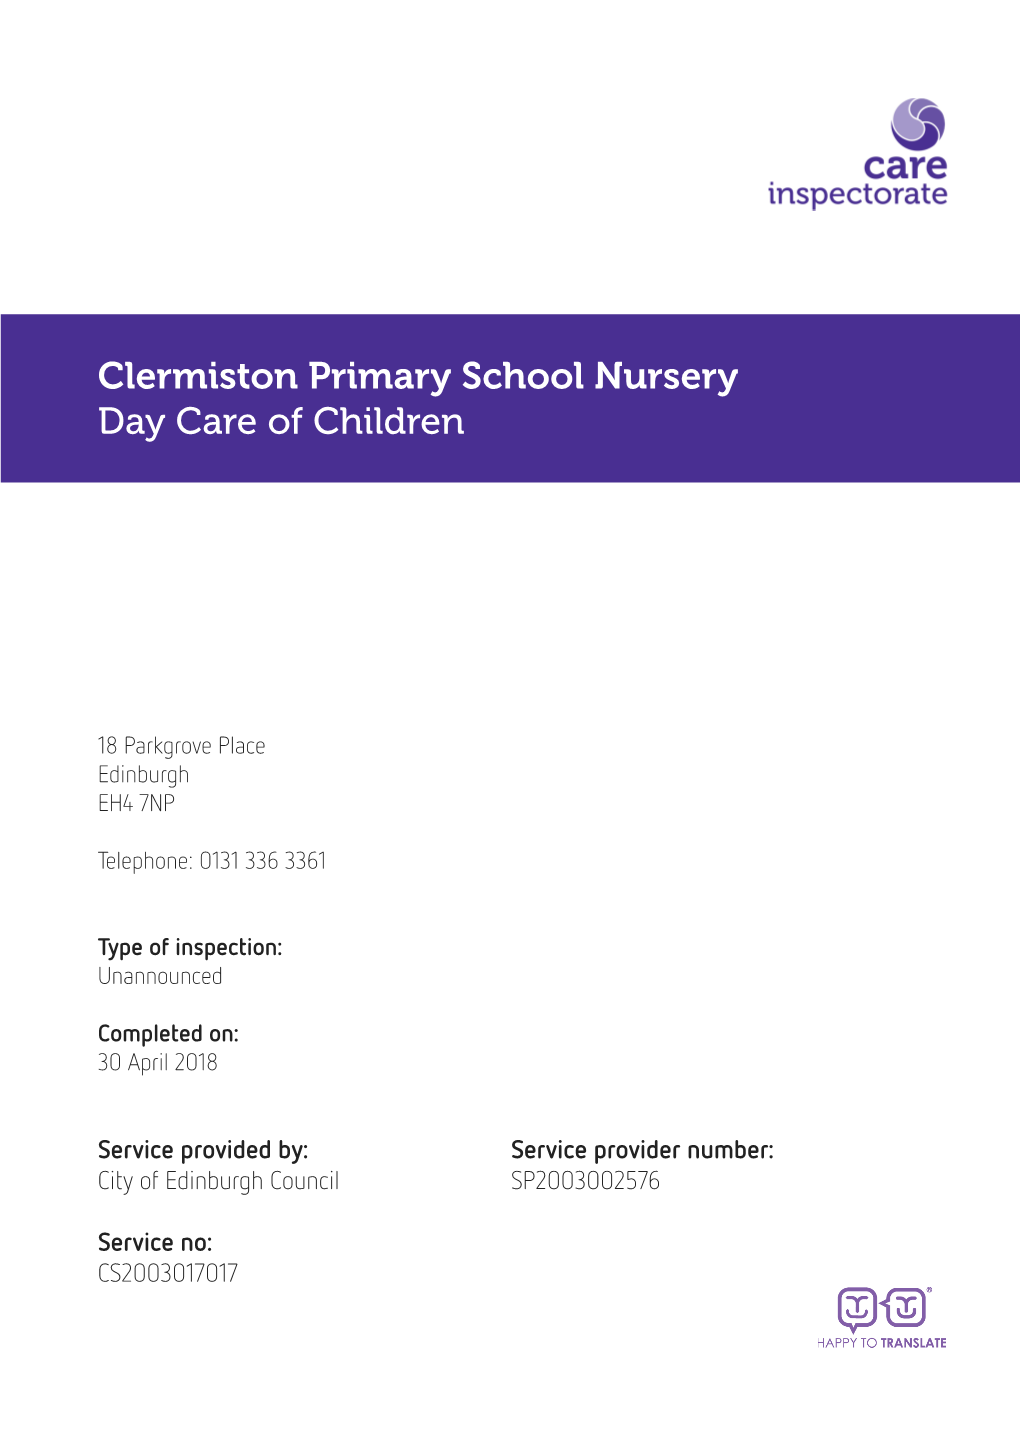 Clermiston Primary School Nursery Day Care of Children